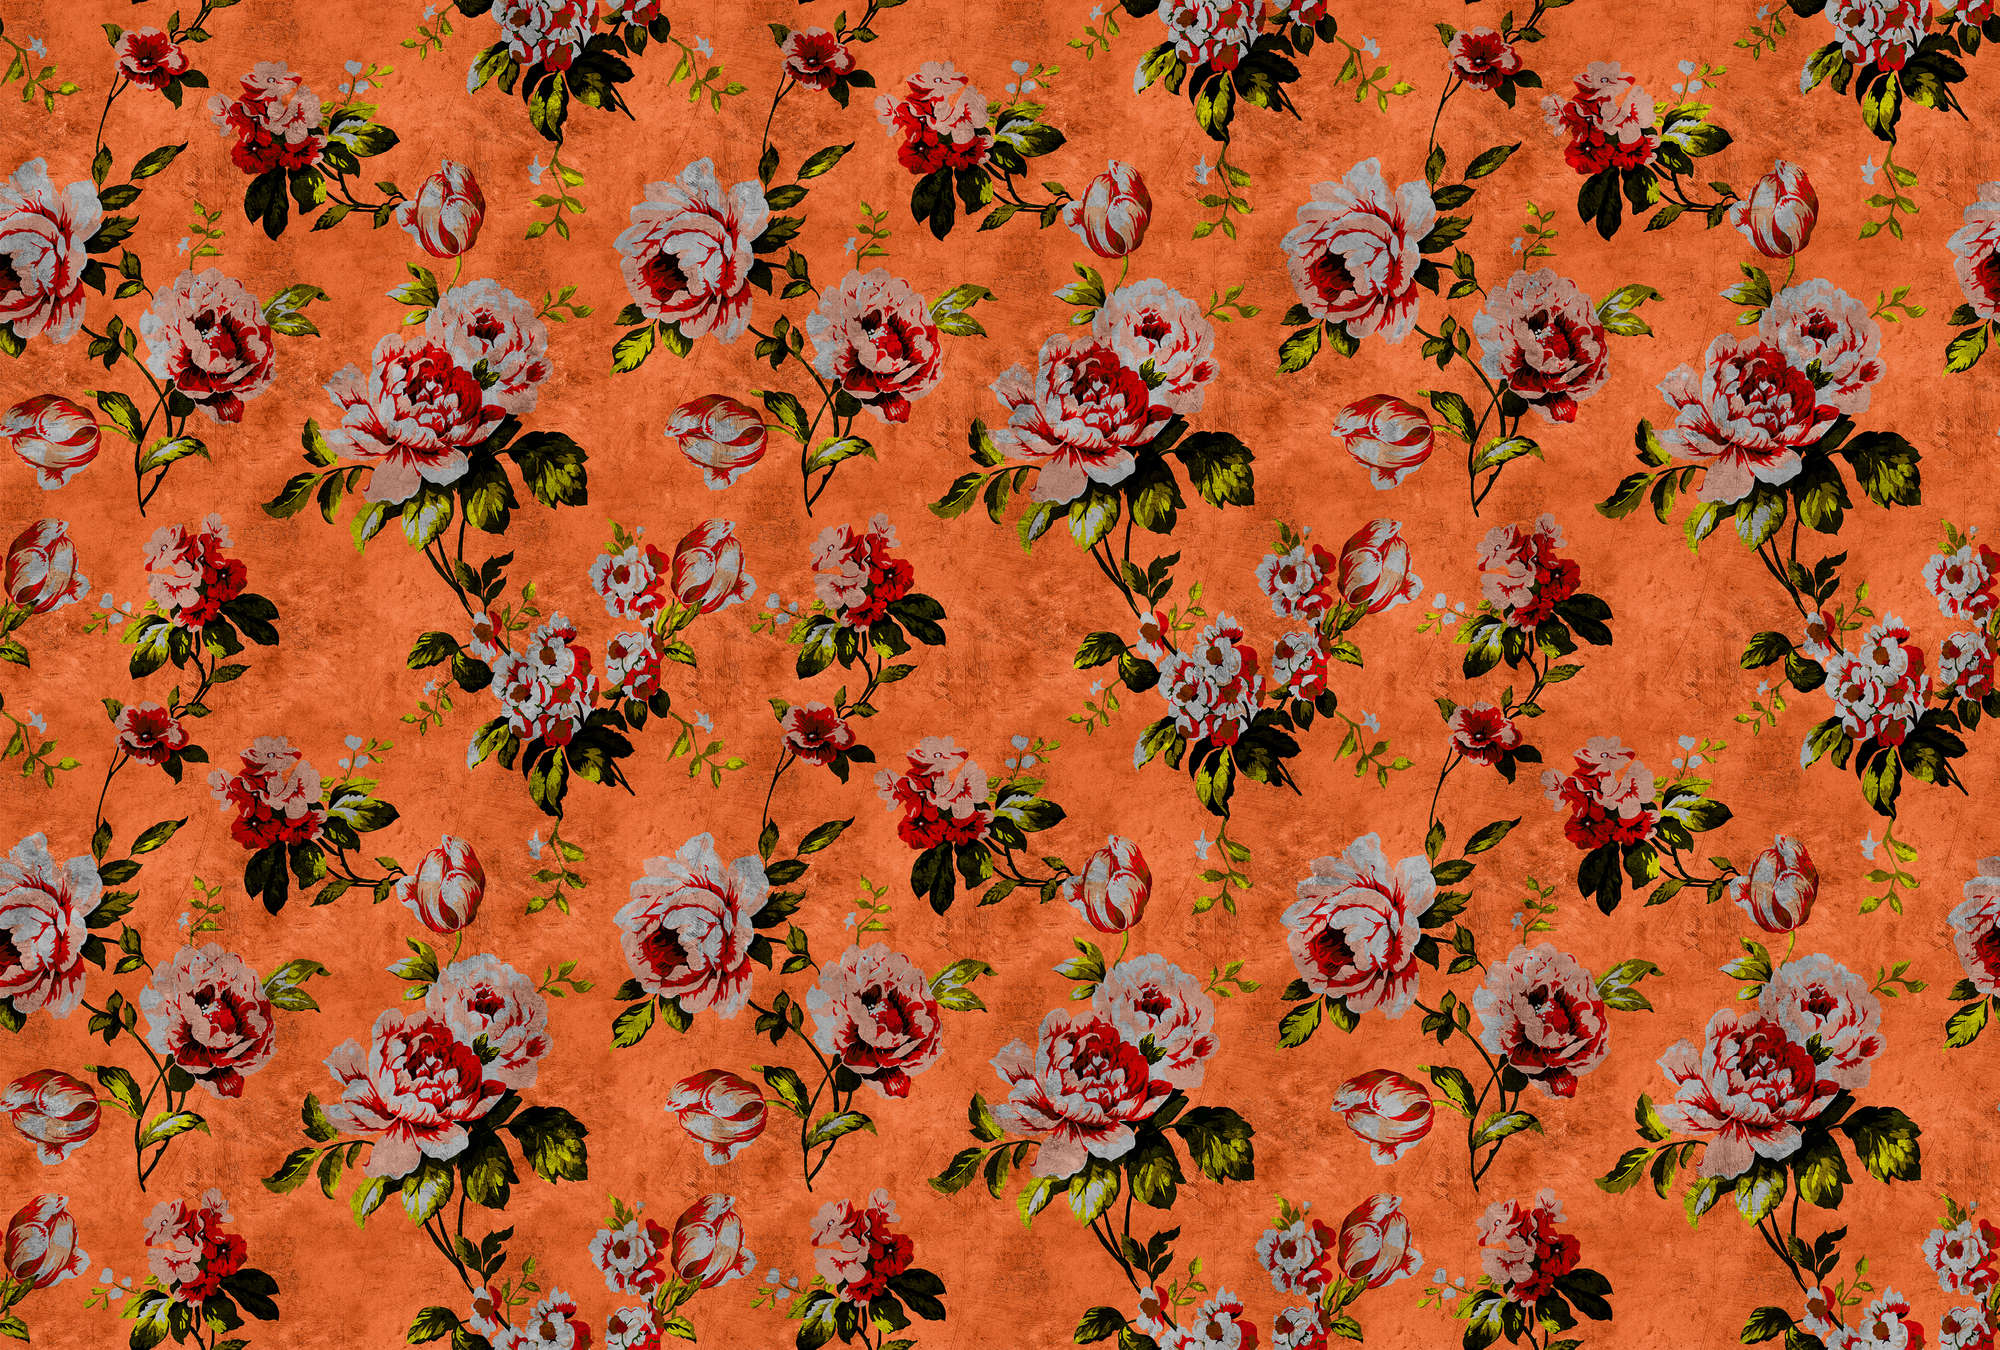             Wild roses 2 - Papier peint panoramique roses à structure rayée, look rétro, orange - jaune, orange | Premium intissé lisse
        